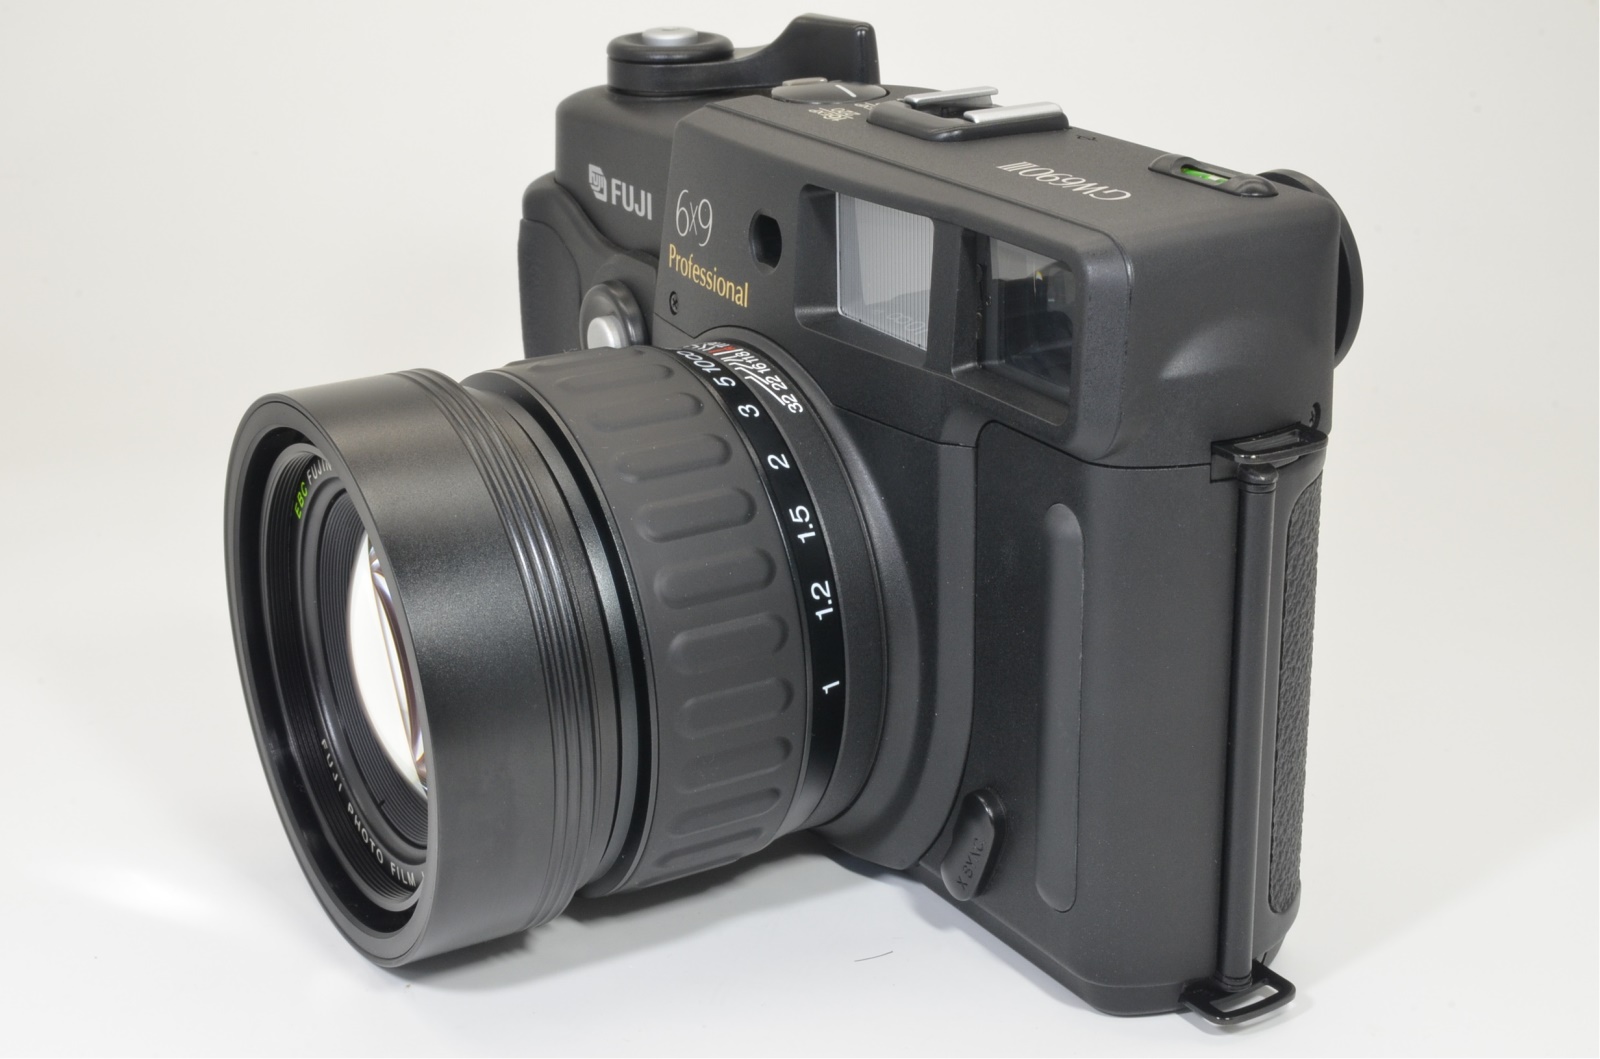 Fuji Fujifilm GW690III 90mm f3.5 count 032 medium format camera